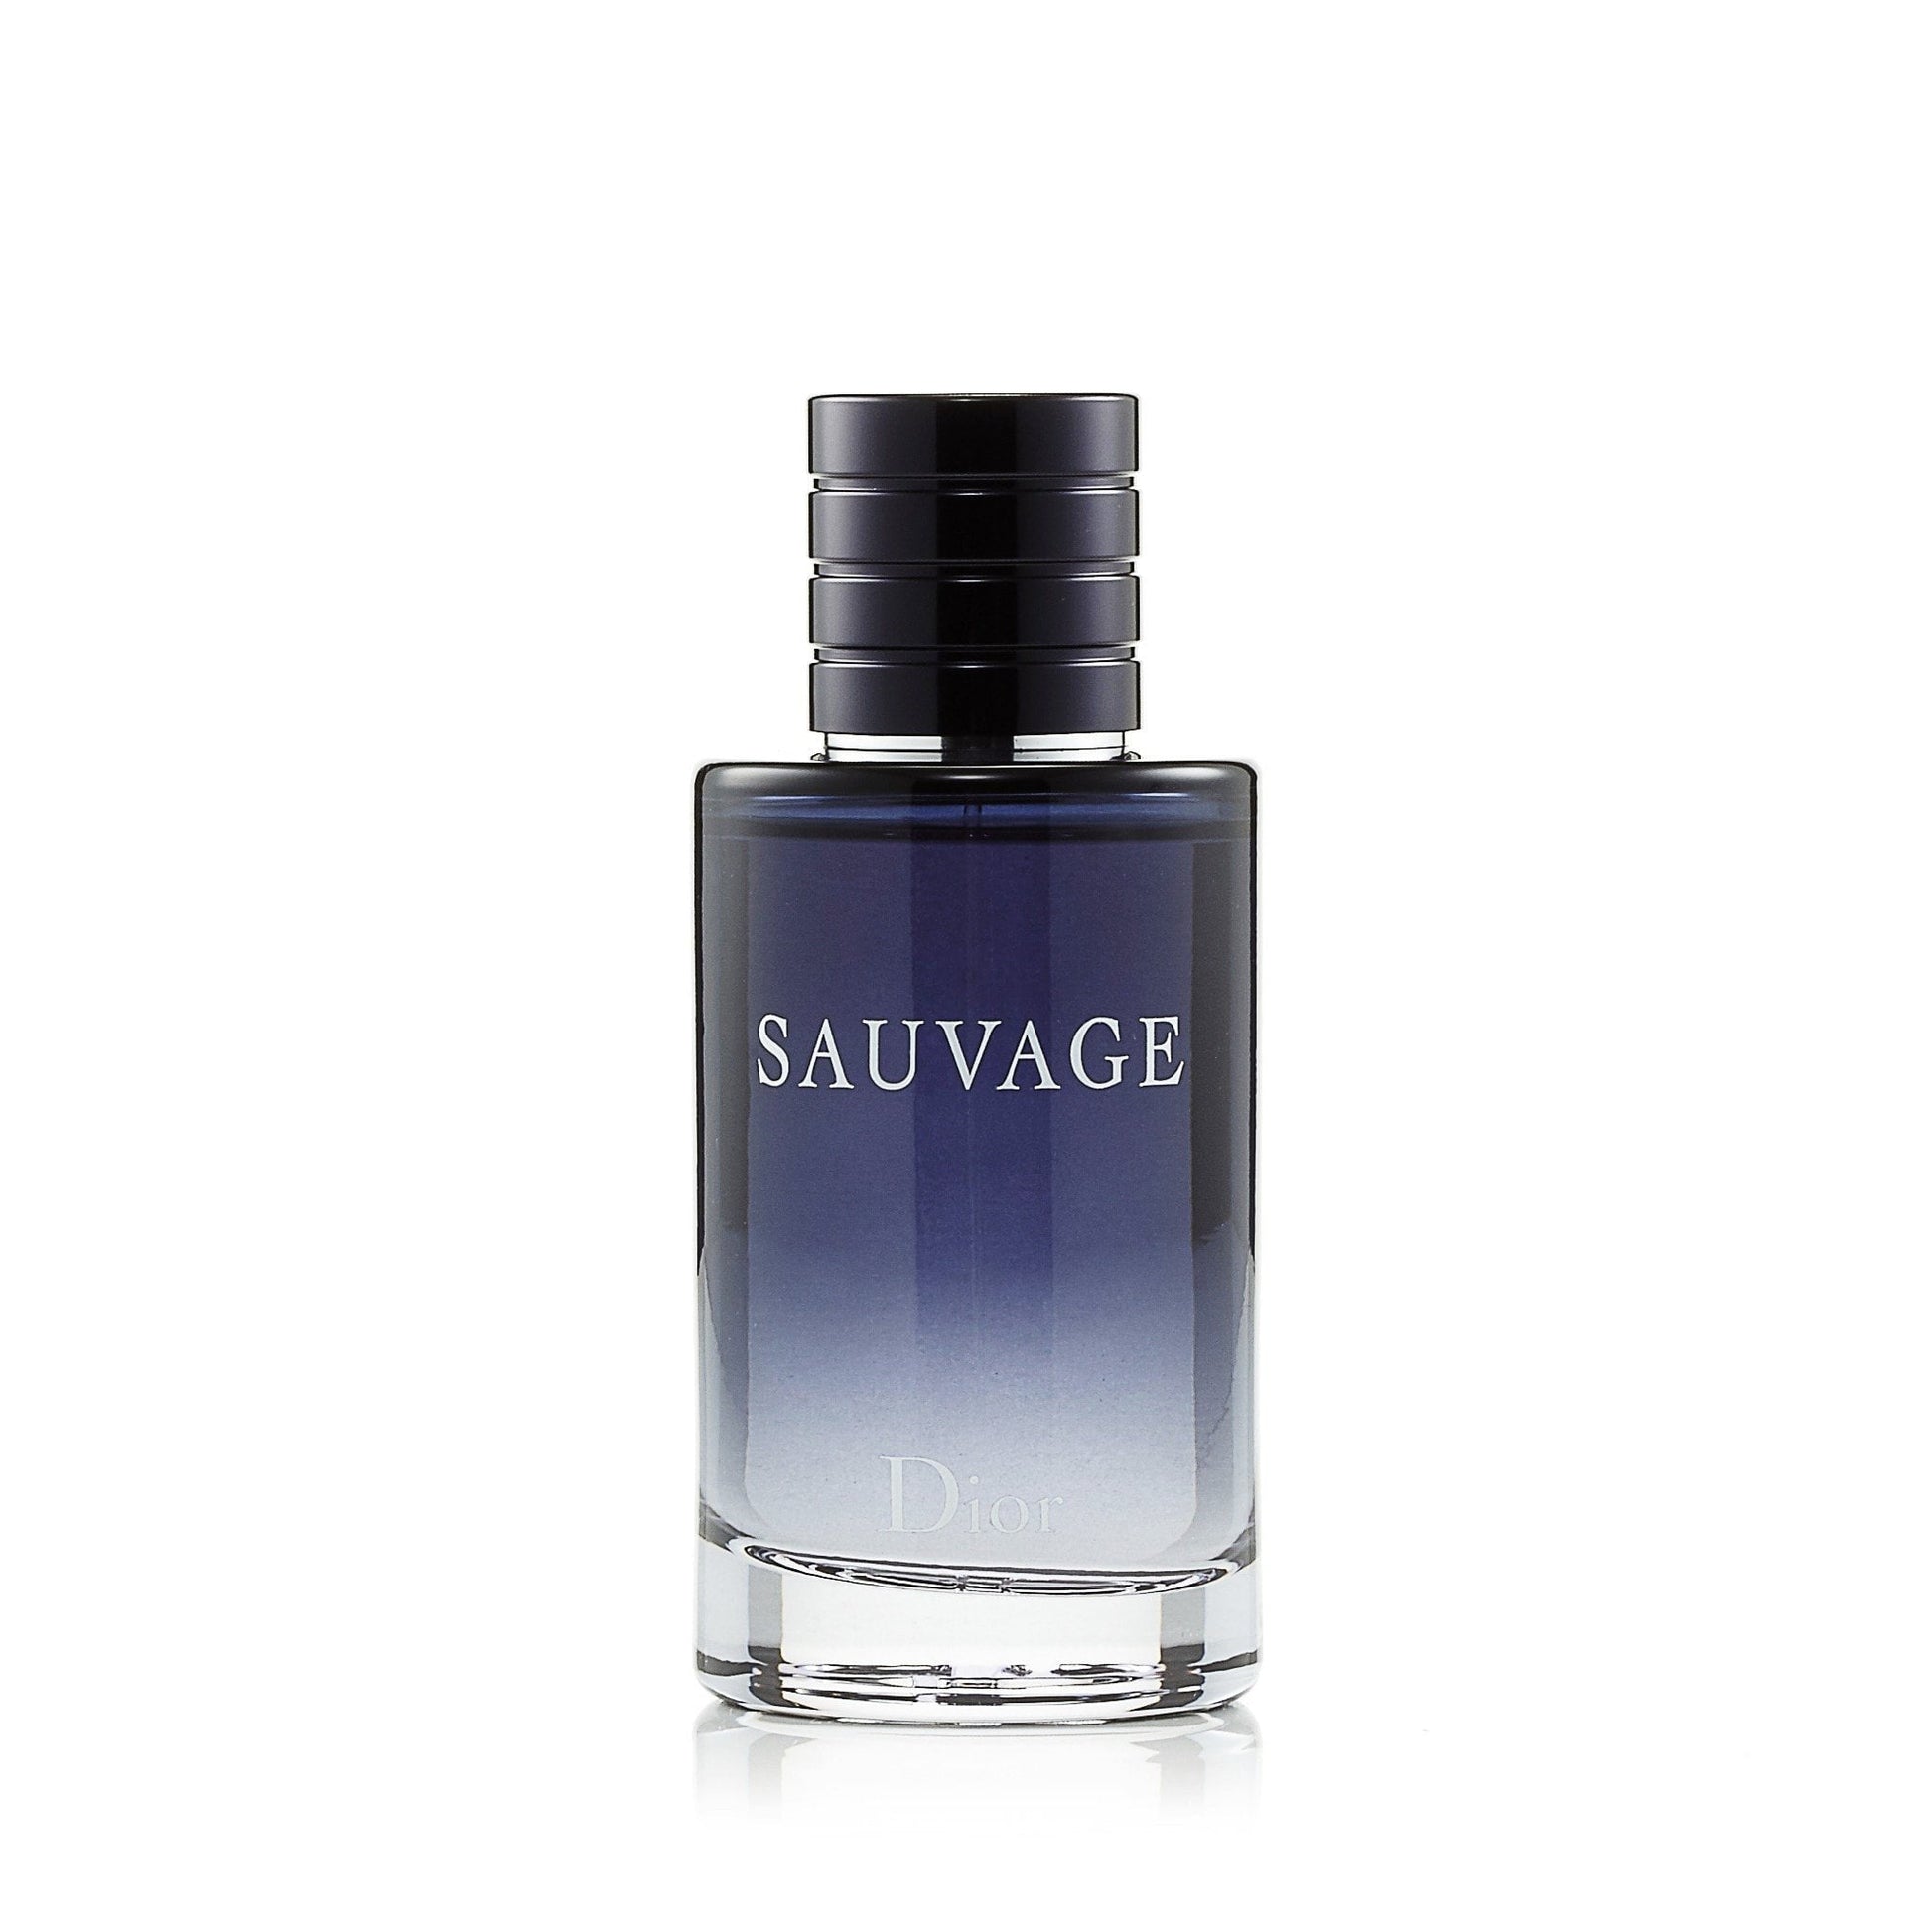 Sauvage Eau de Toilette Spray for Men by Dior, Product image 3